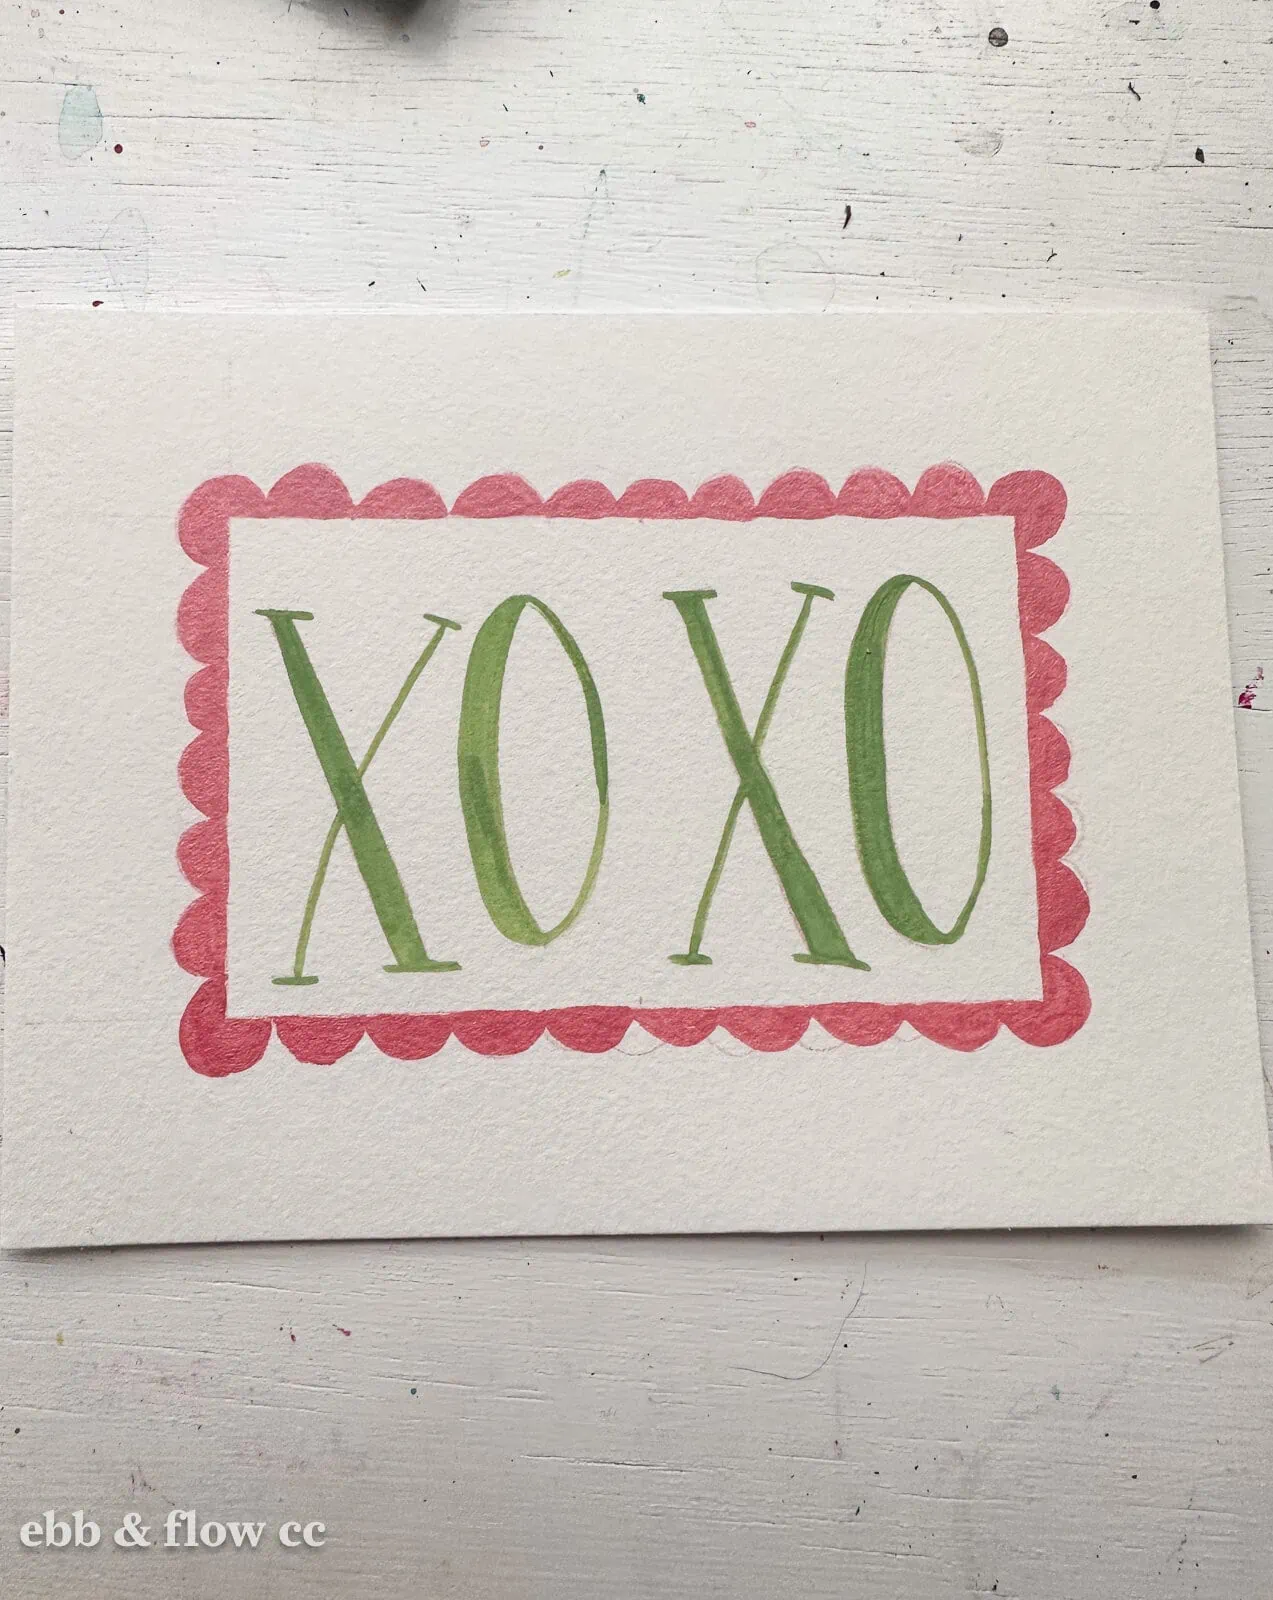 card that says xoxo